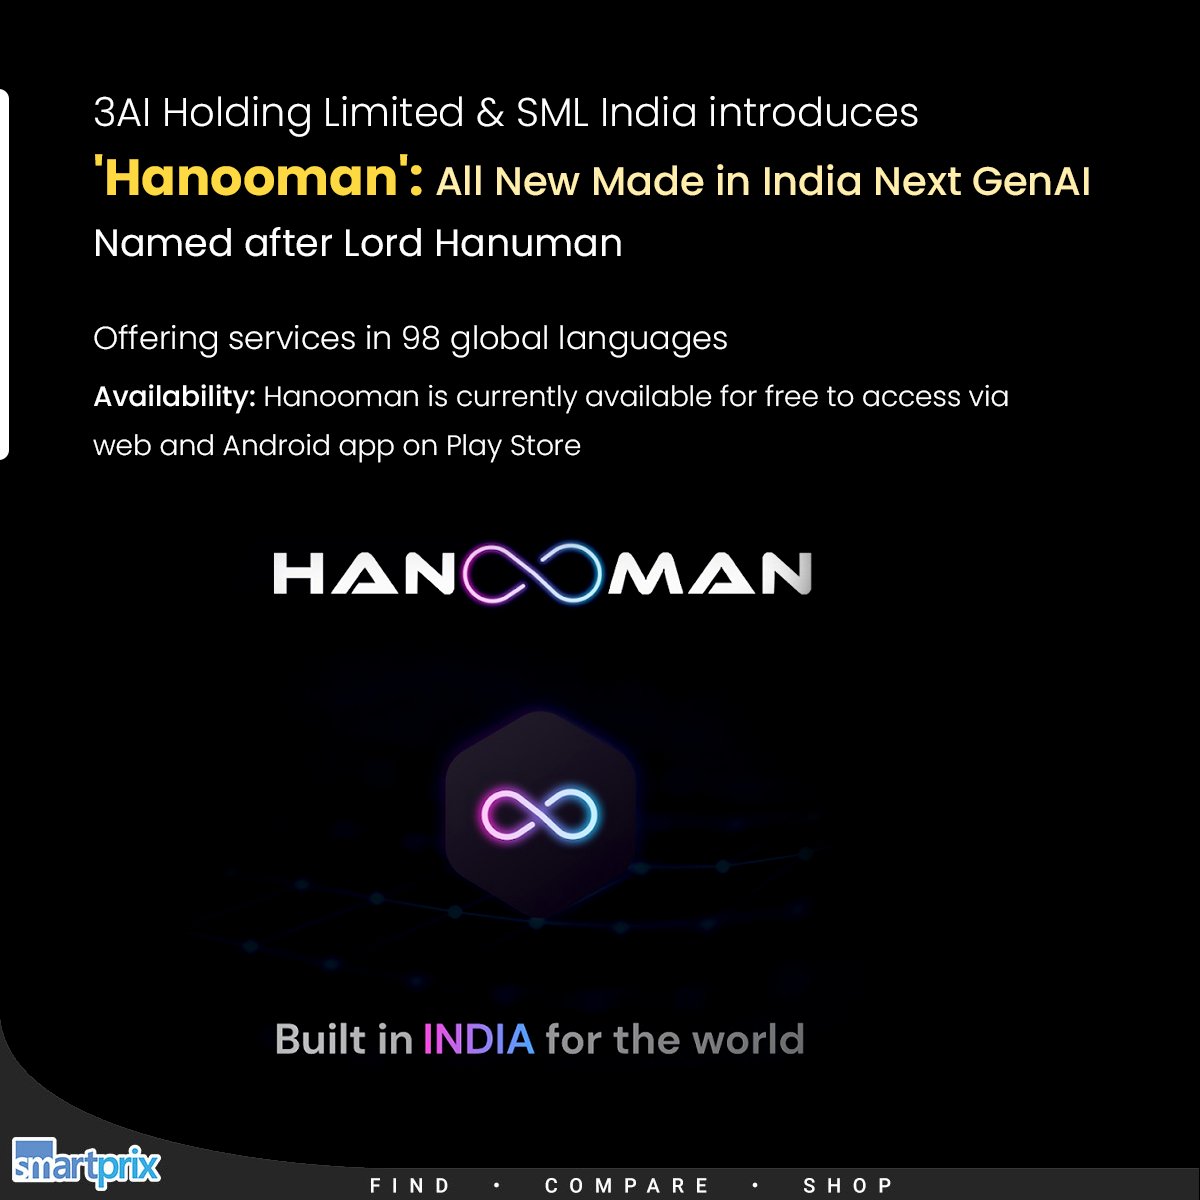 India’s newest GenAI platform ‘Hanooman’ is here smpx.to/S5XC0H

#Hanooman #AI #artificialinteligence